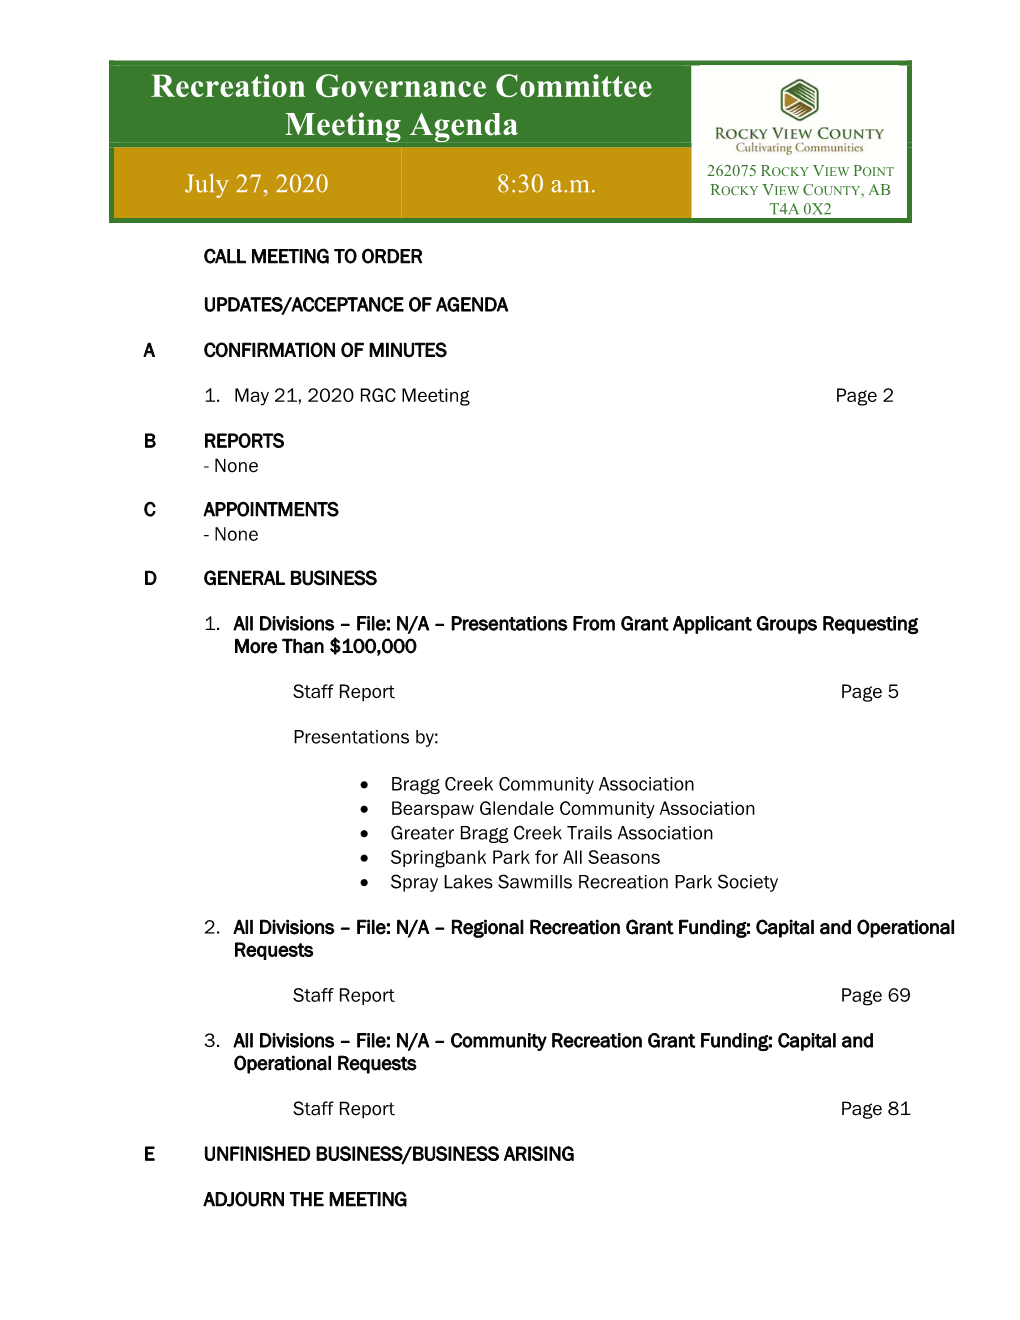 Recreation Governance Committee Meeting Agenda